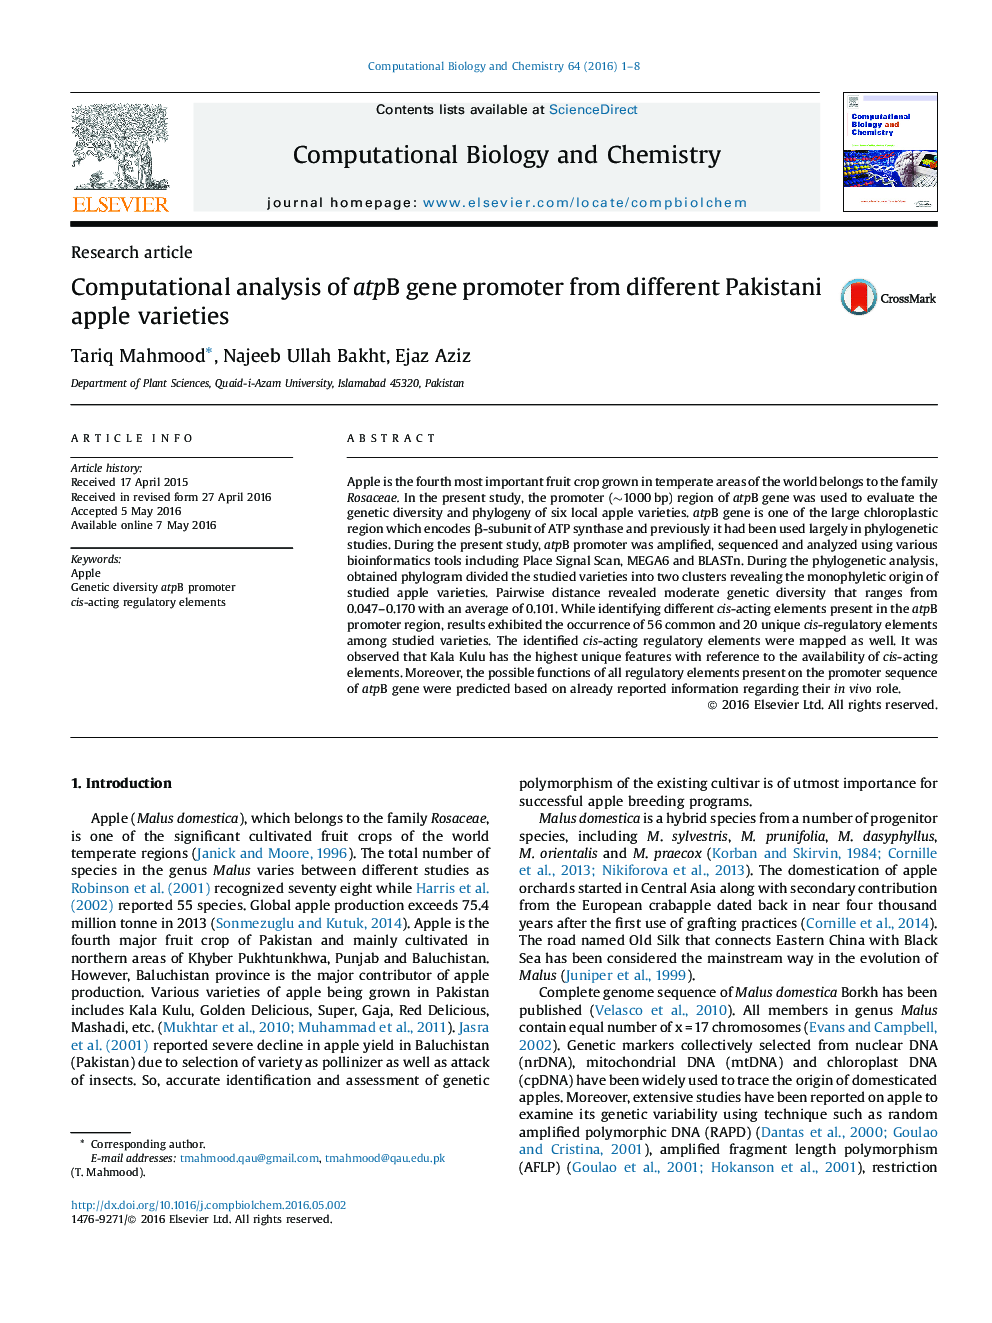 Computational analysis of atpB gene promoter from different Pakistani apple varieties